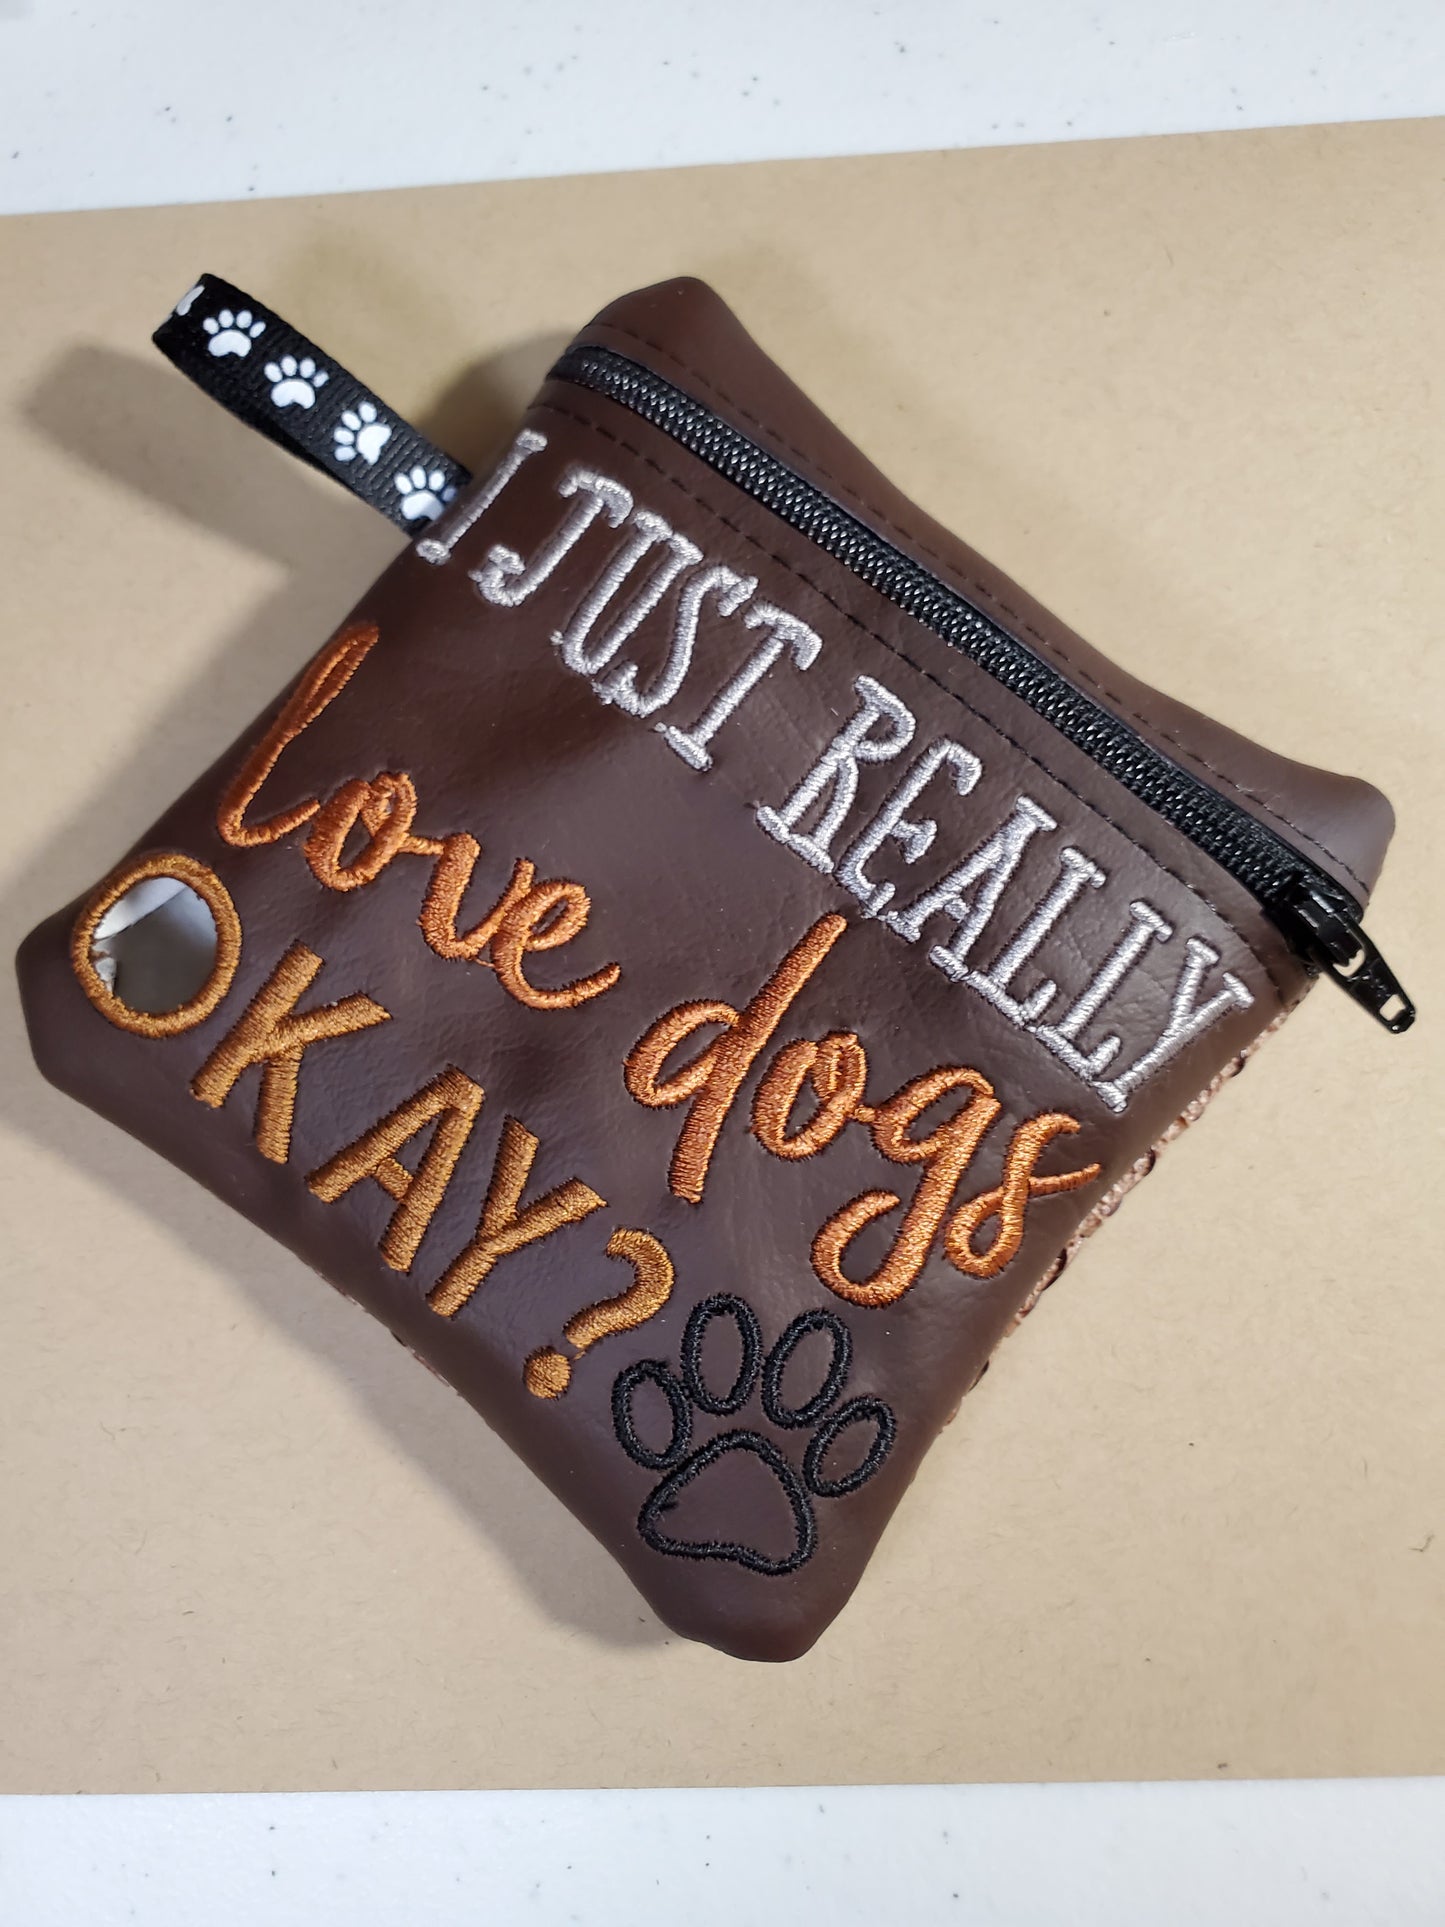 "I just really love dogs okay?" - Dog Poo bag holder - Love Dogs